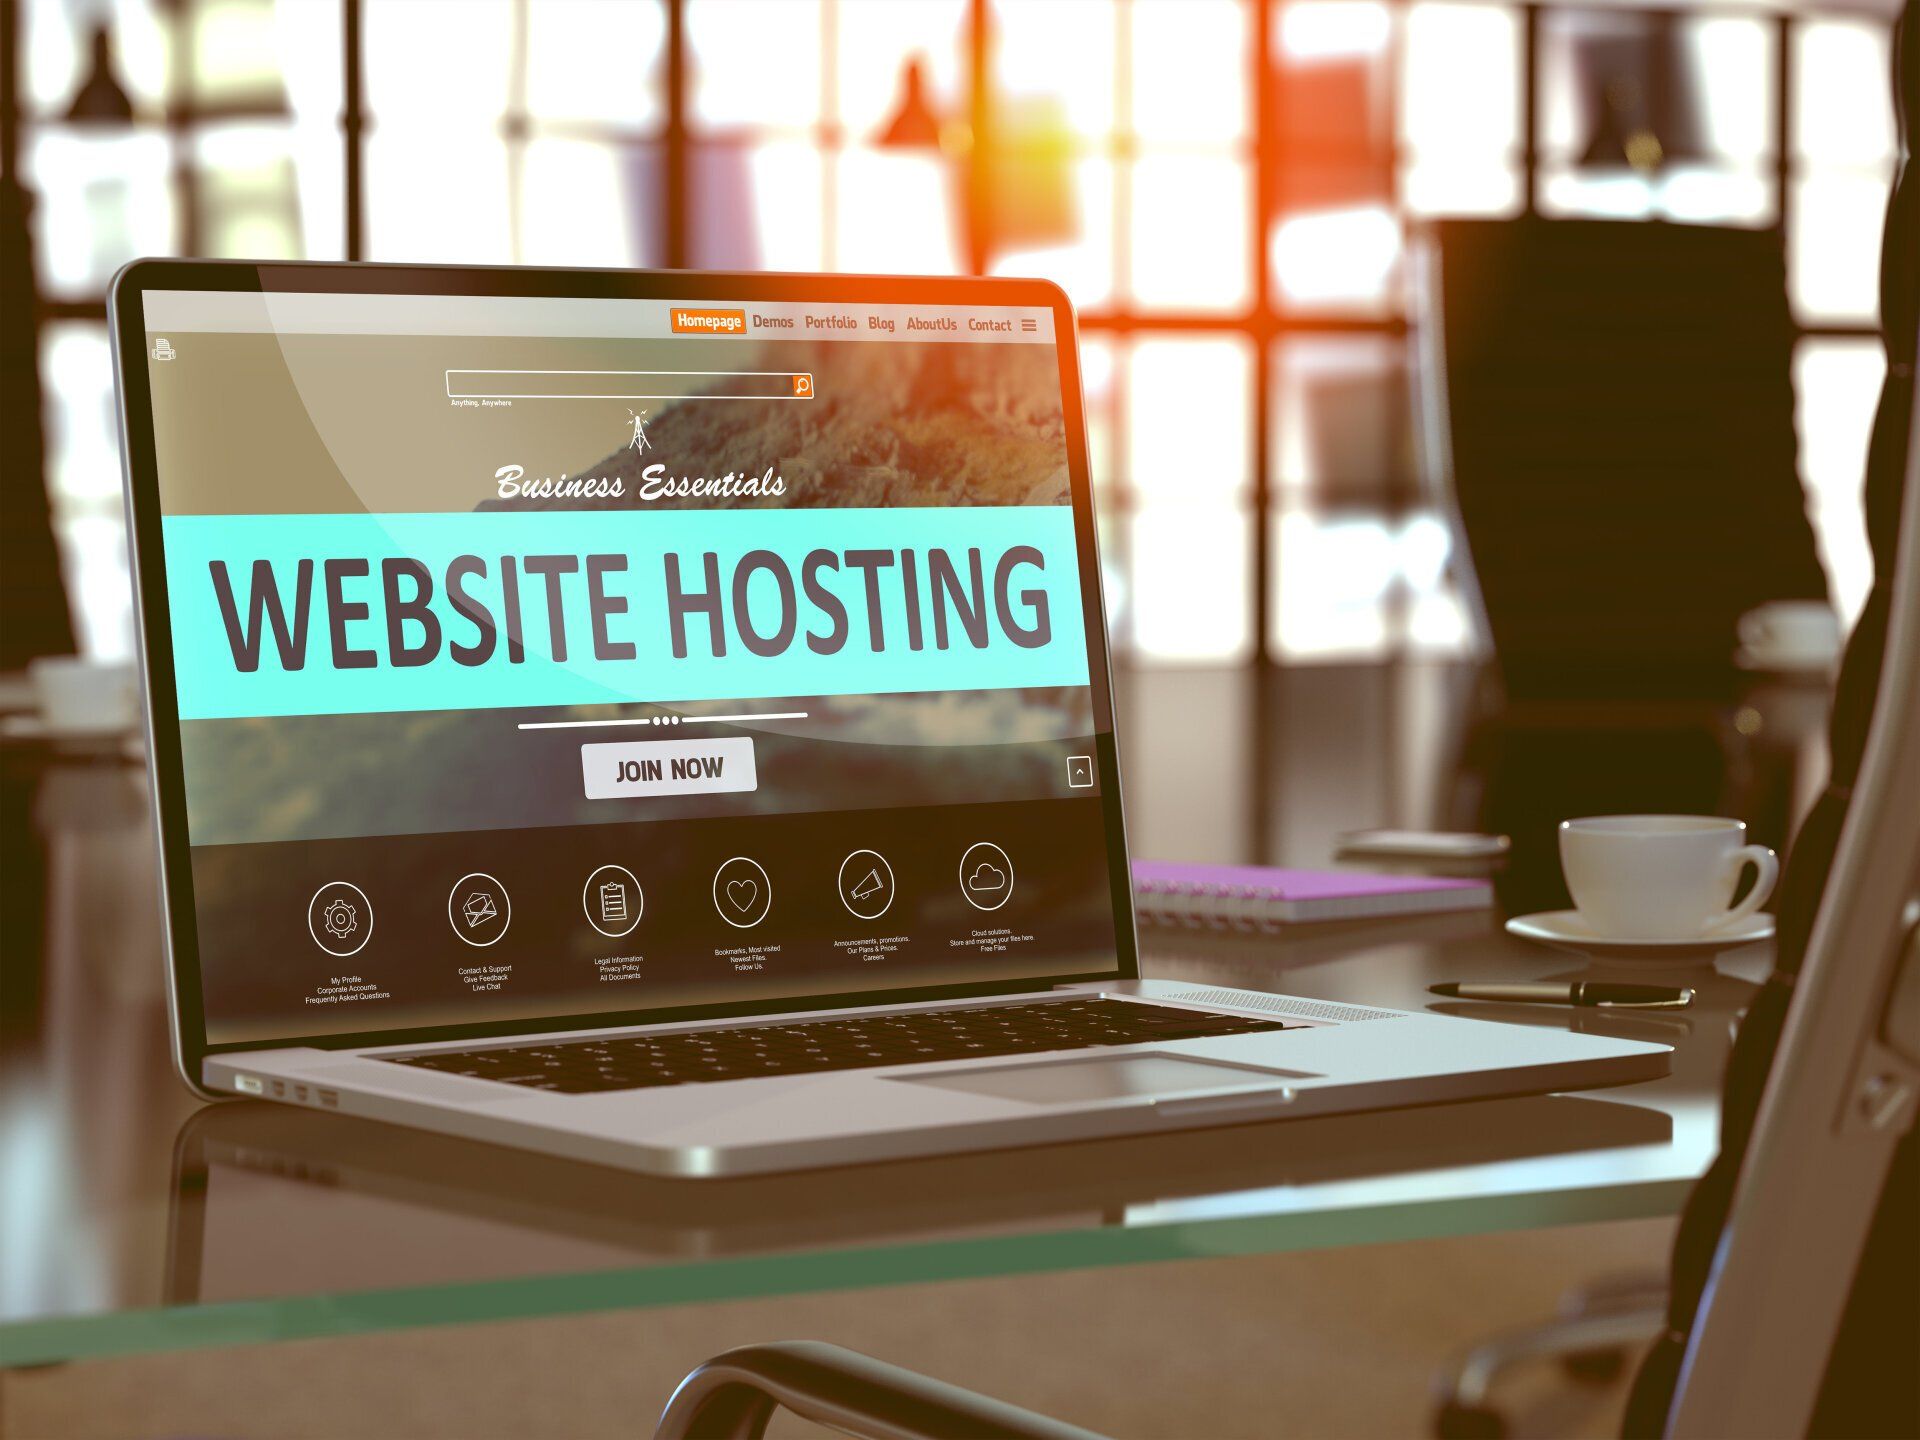 Web hosting and SSL certificates